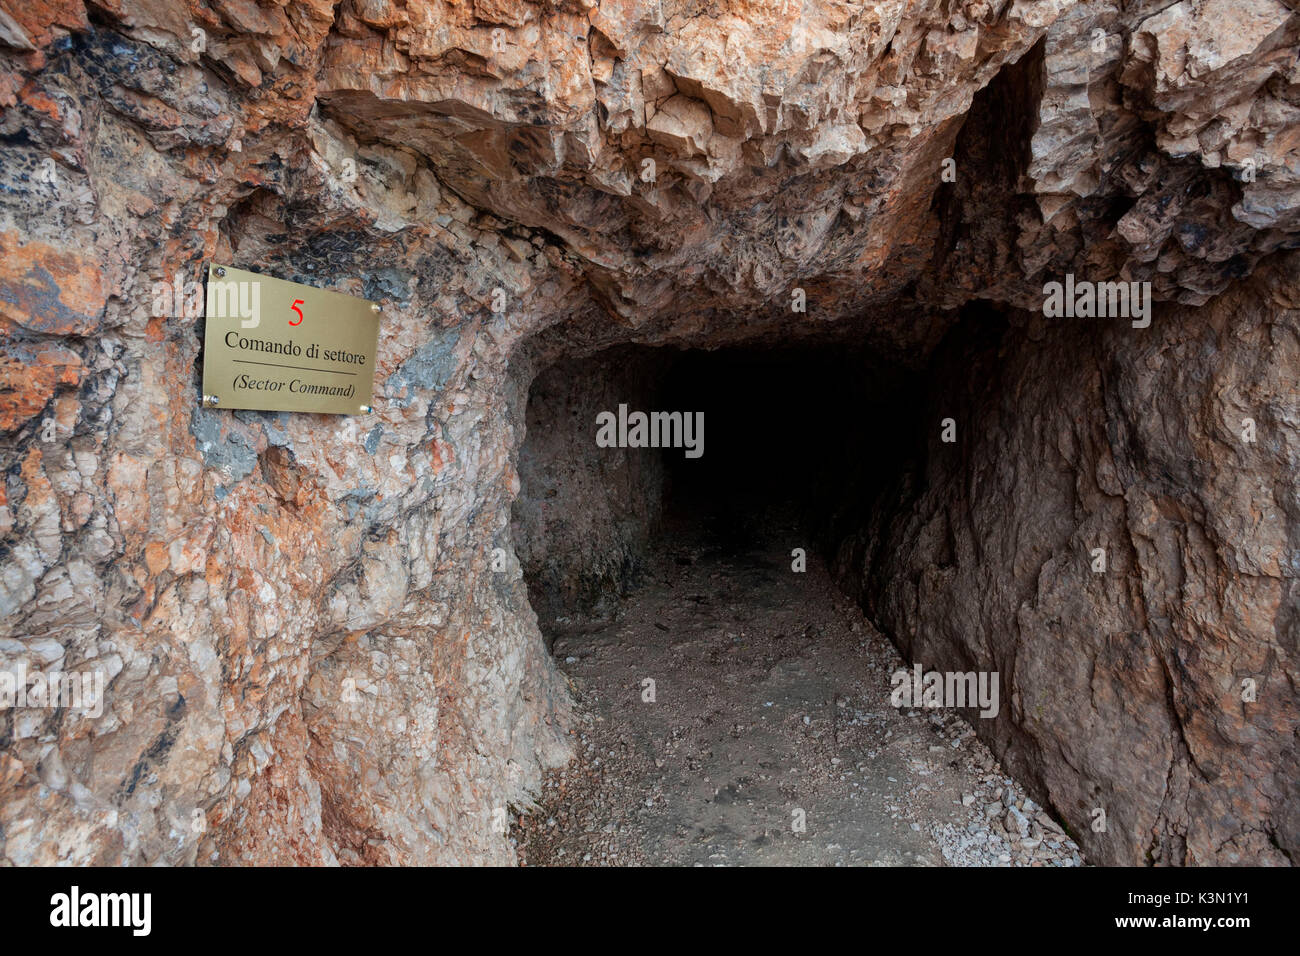 Höhle "Comando di settore" monumentalen Gegend von Punta Serauta, Marmolada, Dolomiten Stockfoto